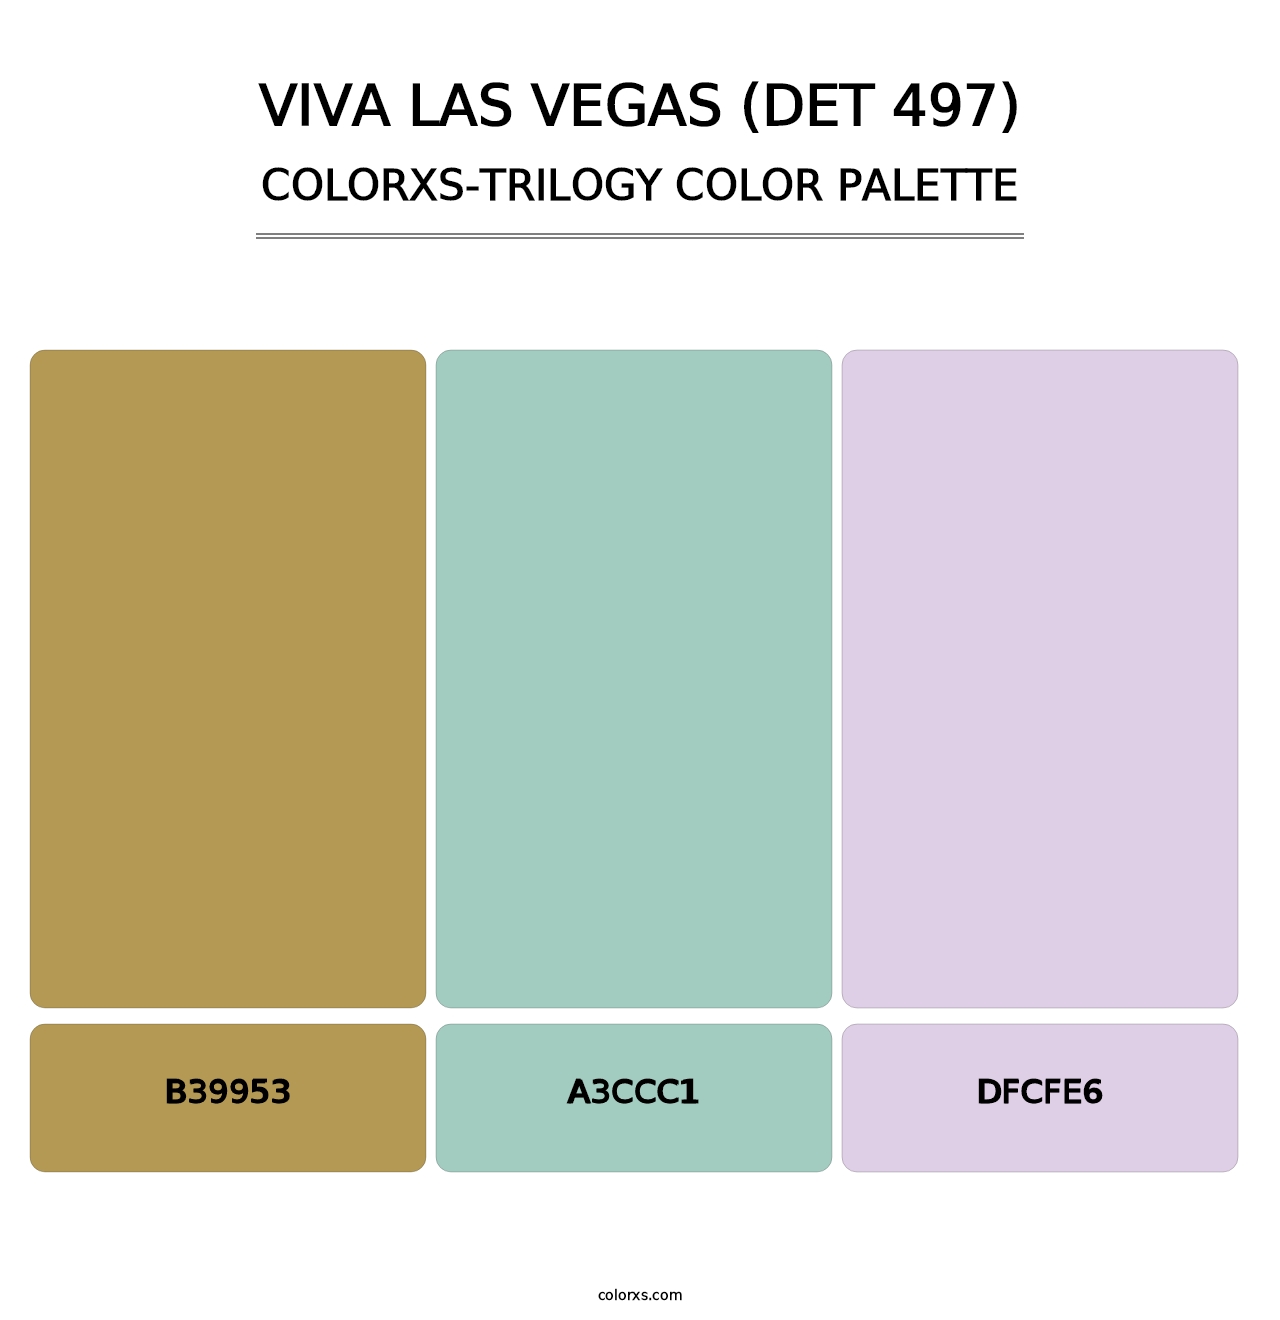 Viva Las Vegas (DET 497) - Colorxs Trilogy Palette